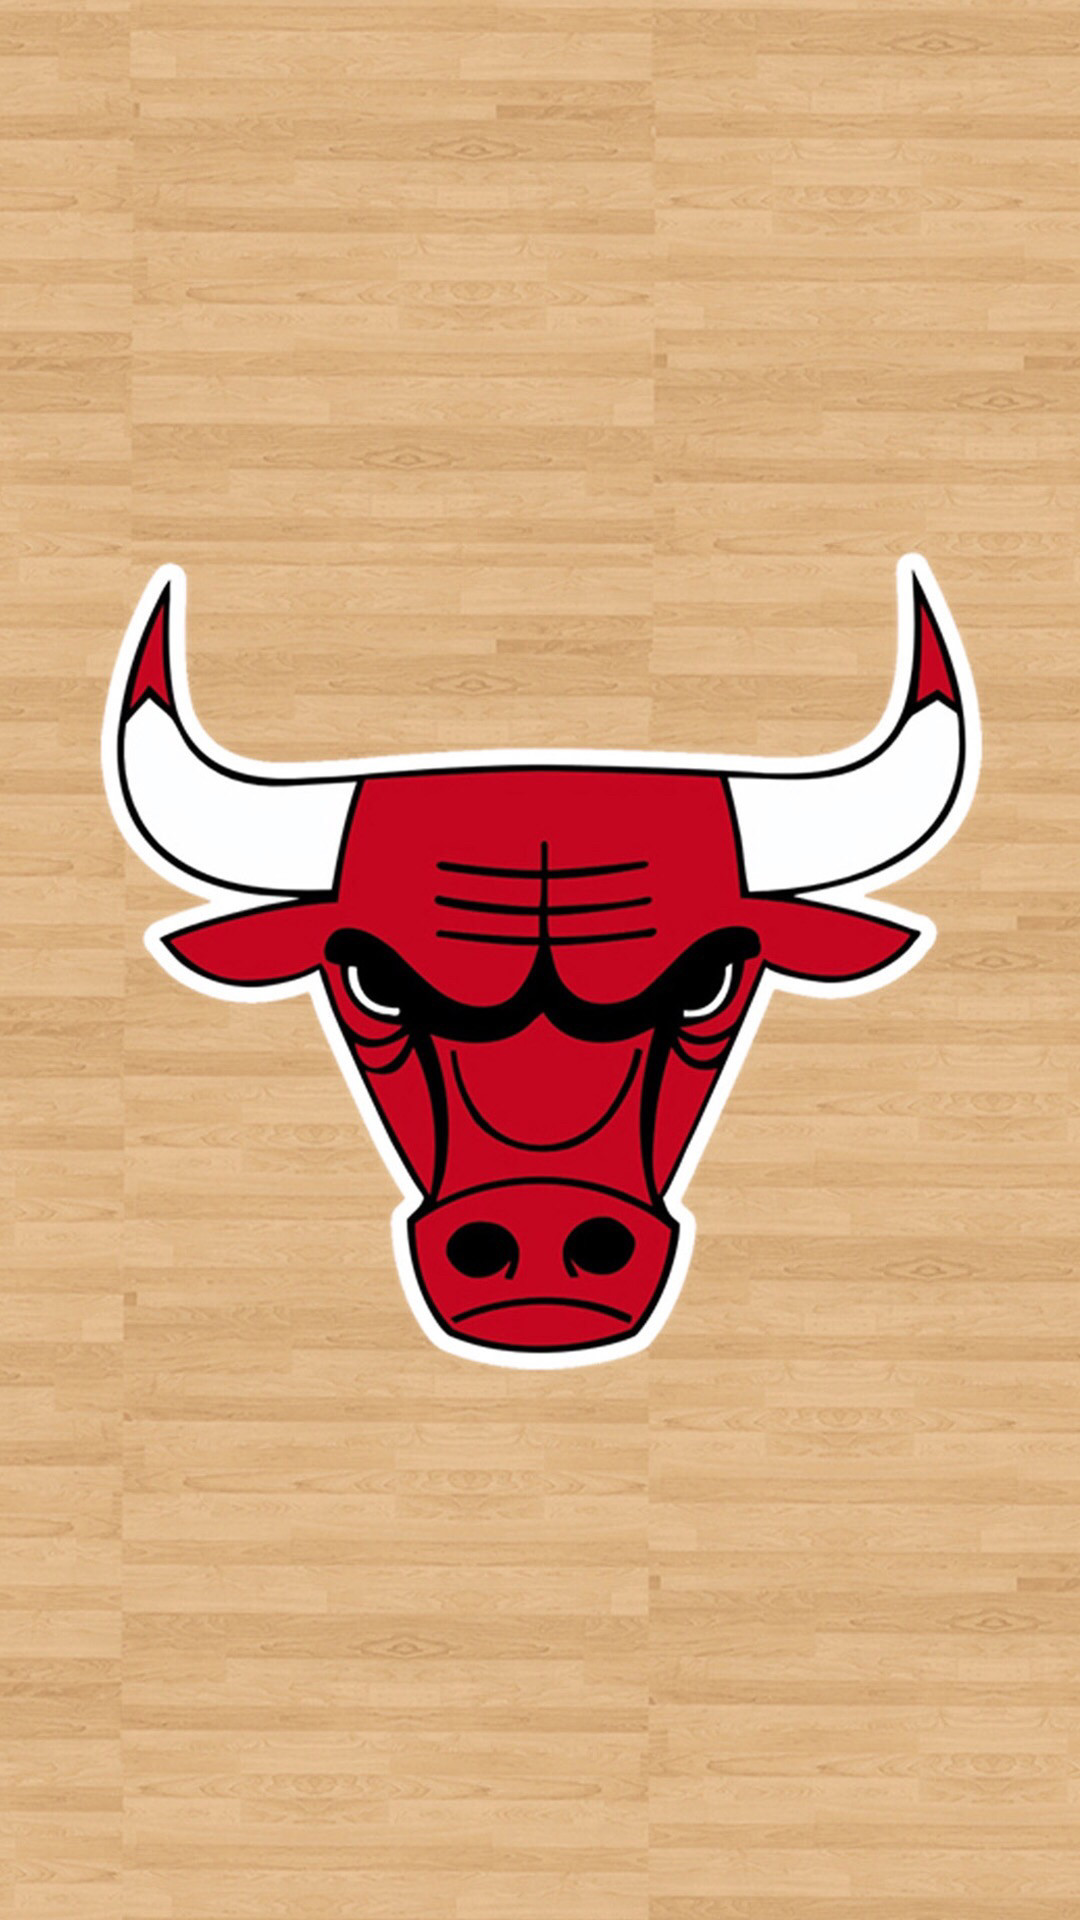 Chicago Bulls news